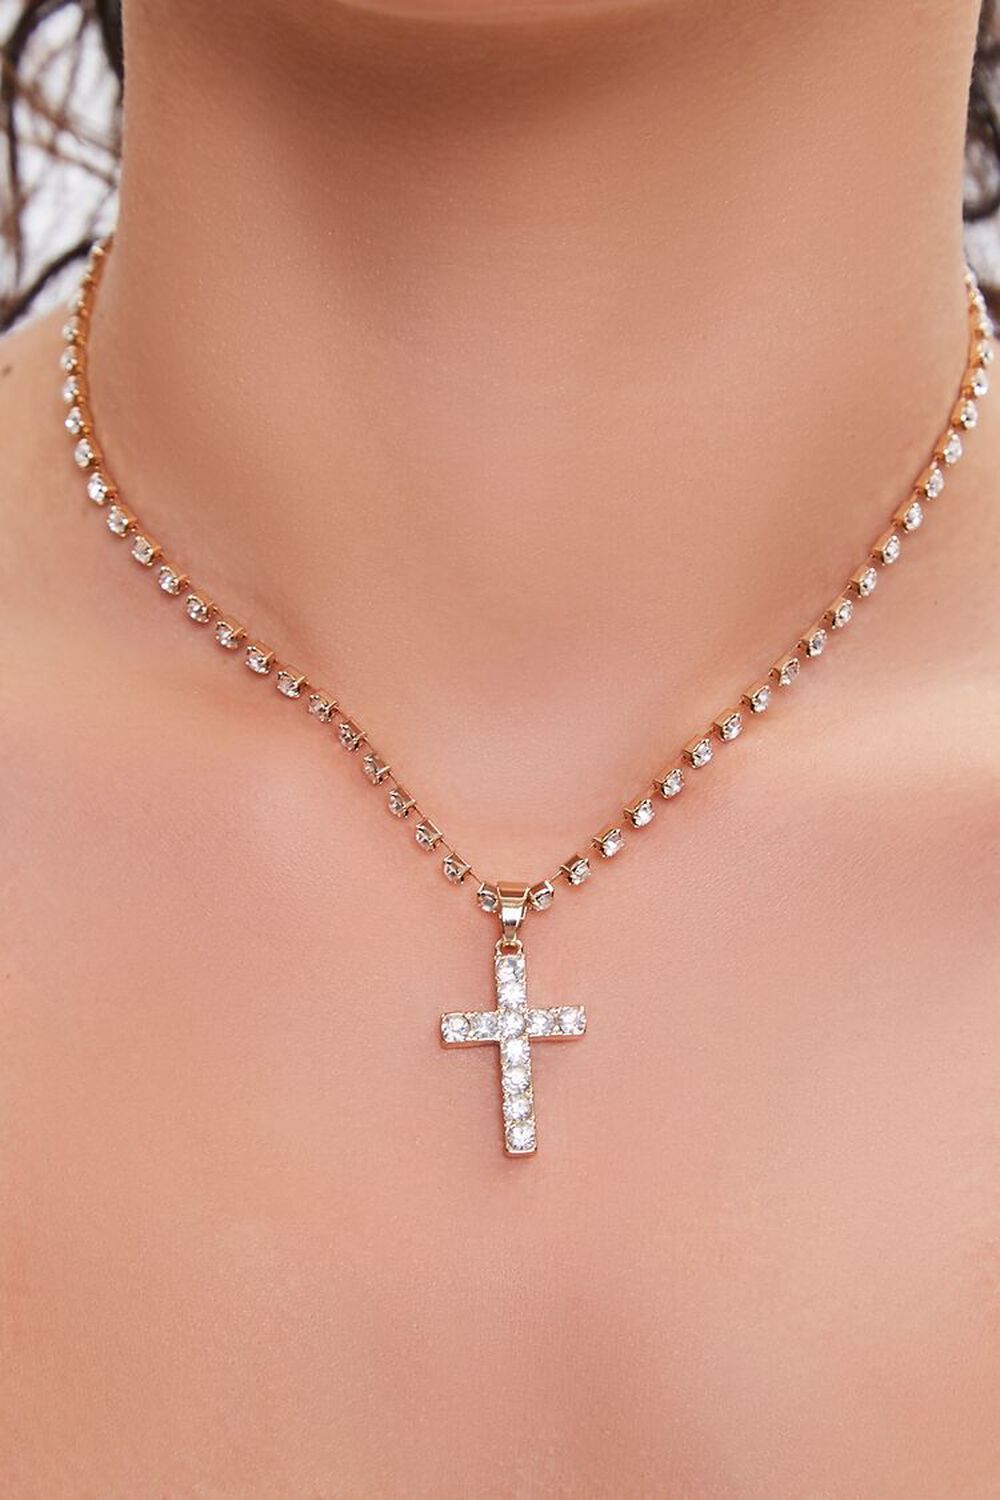 Rhinestone Cross Chain Necklace, image 1